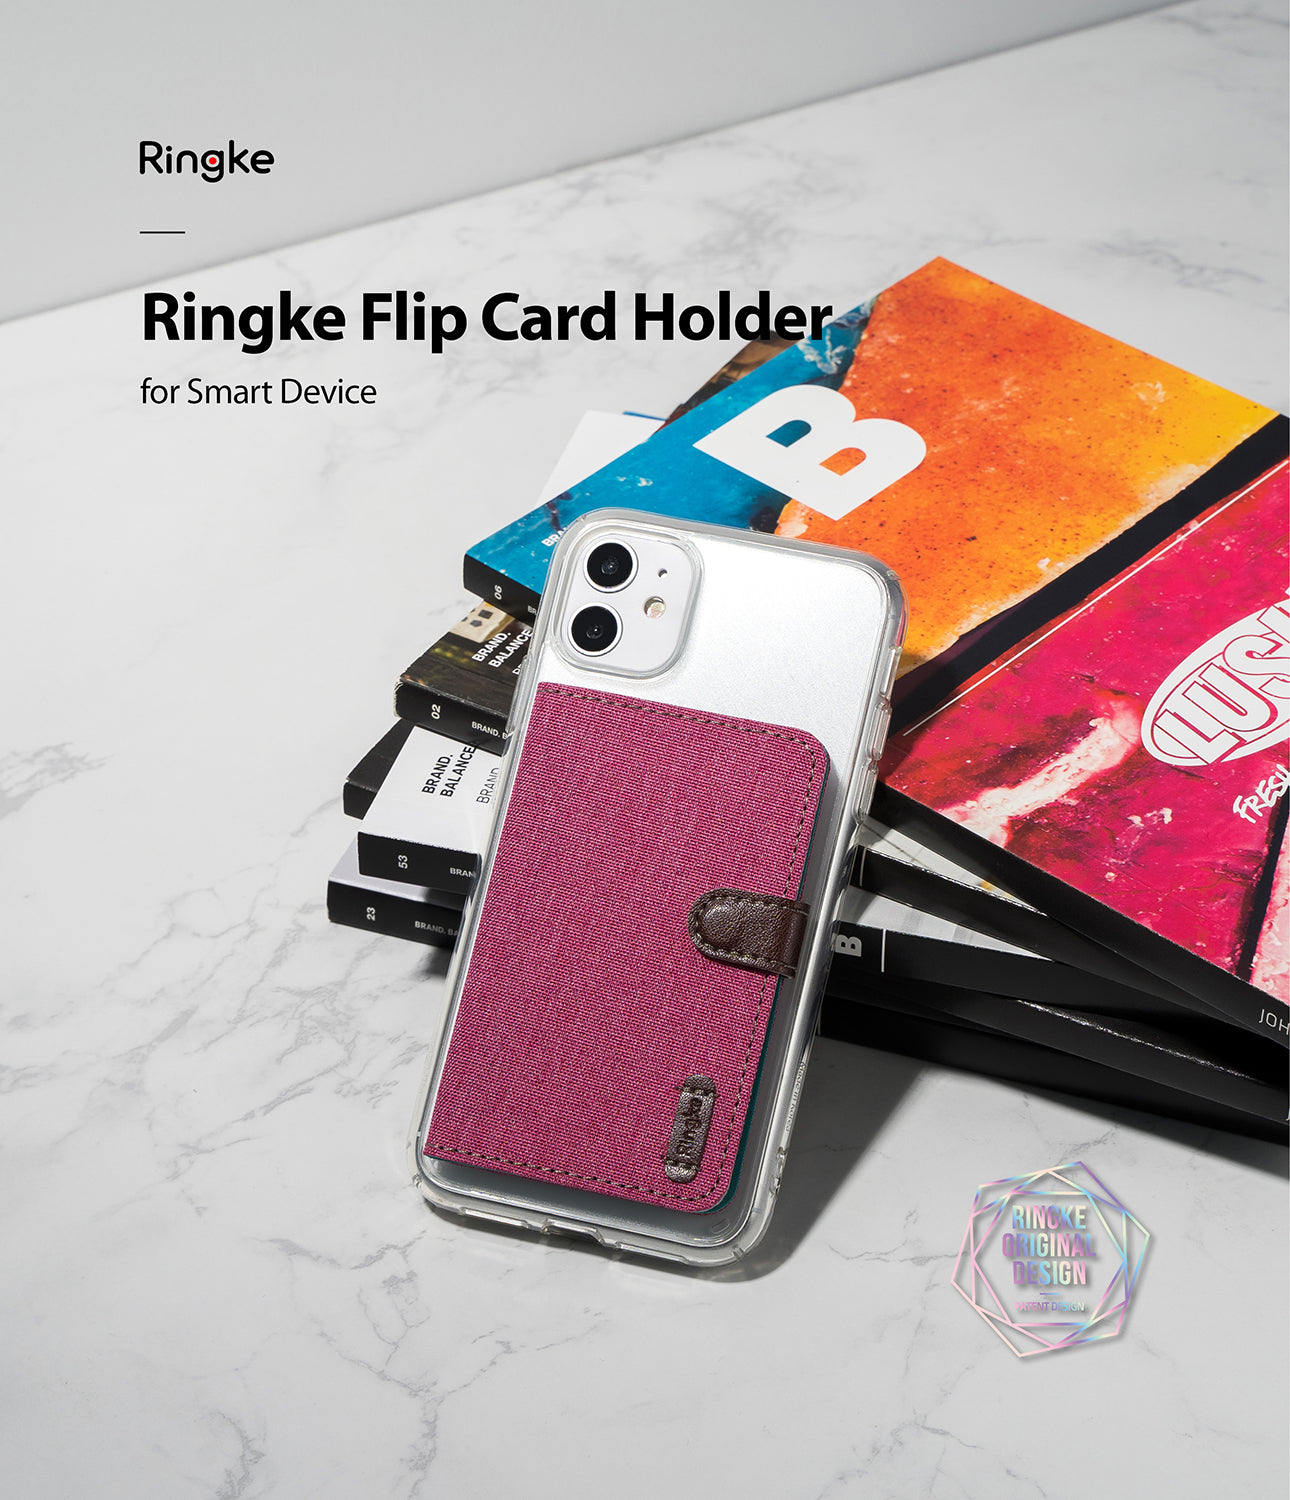 Card Holder | Flip